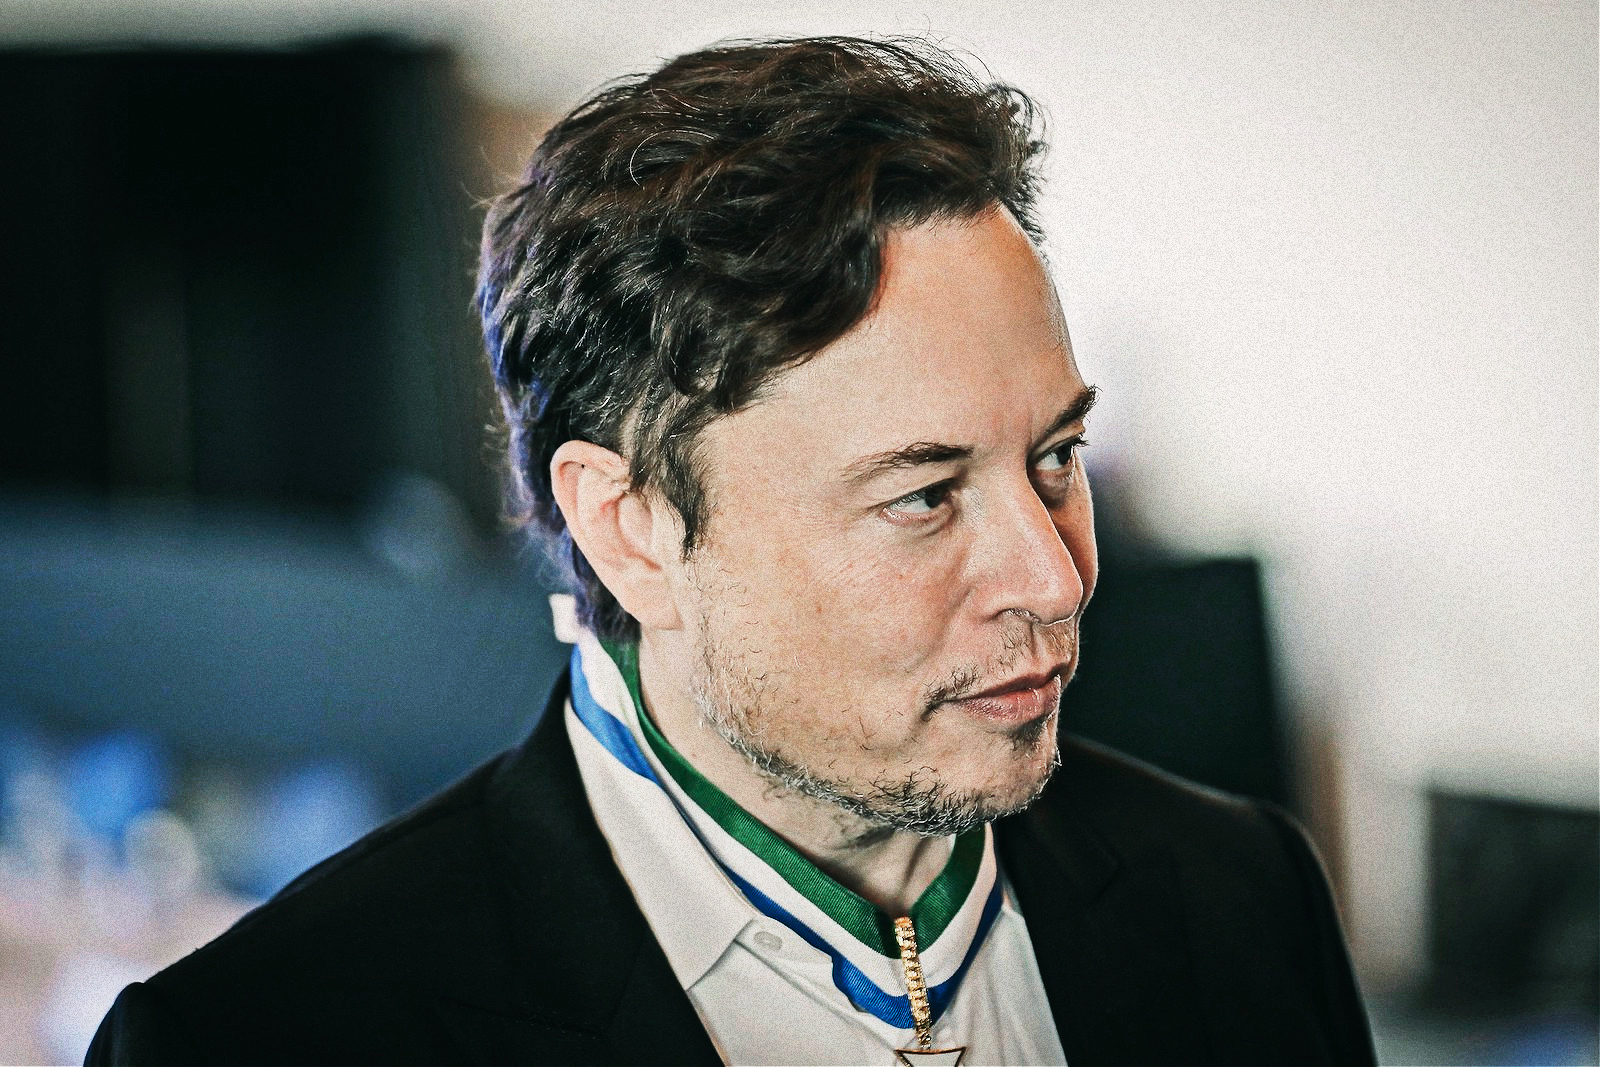 Elon Musk pictured in Brazil